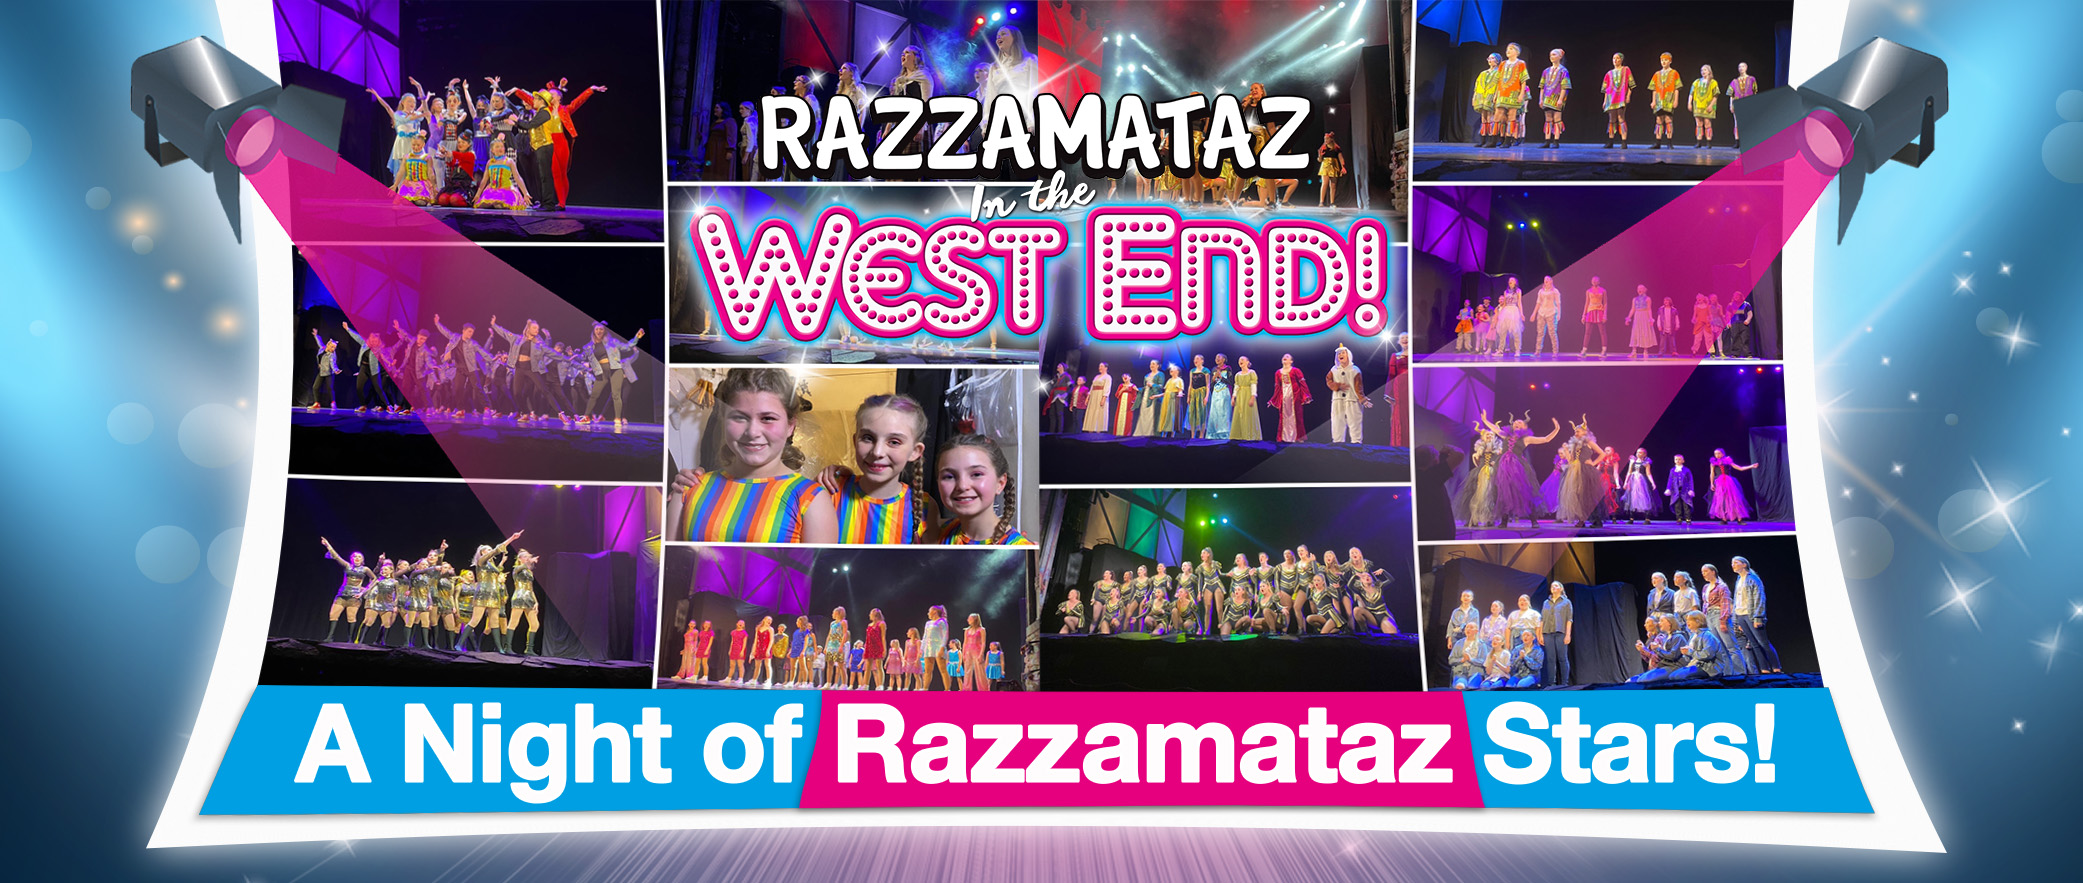 A Night of Razzamataz Stars!